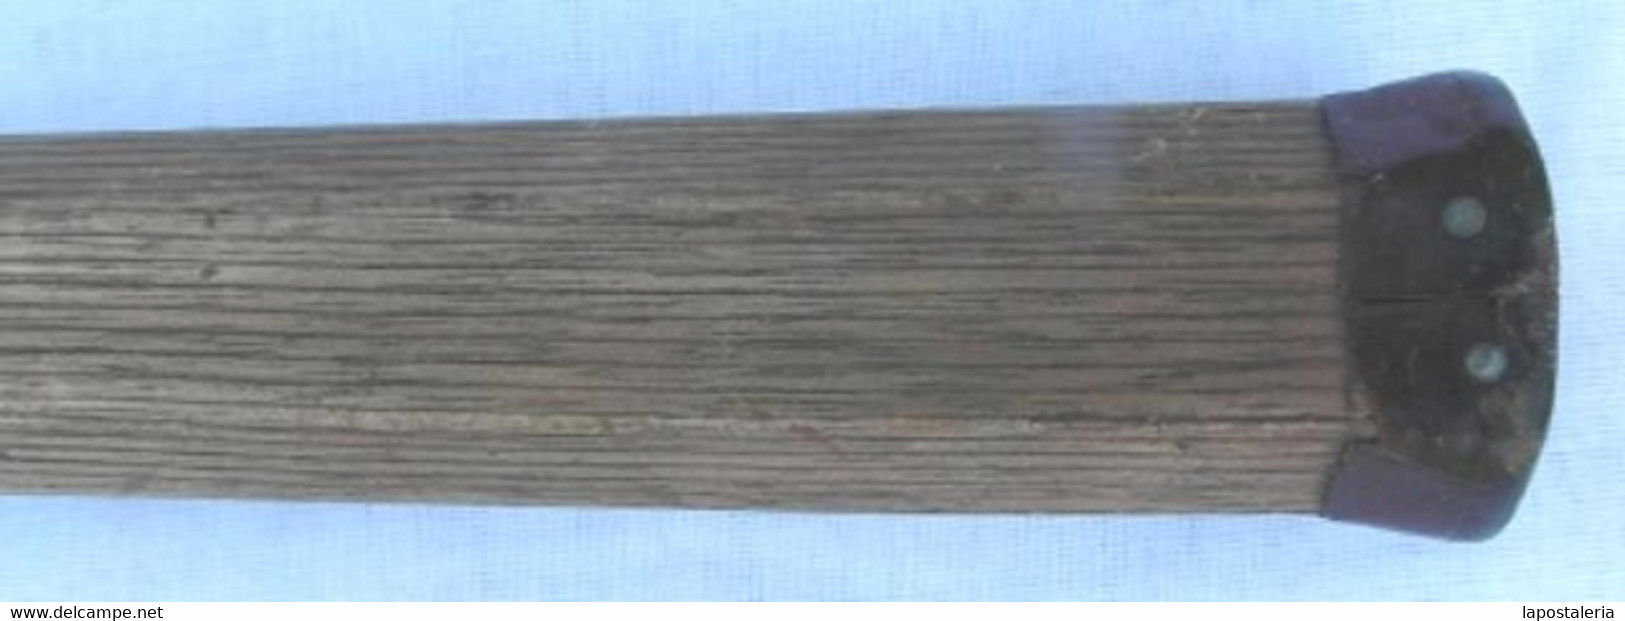 Raqueta madera *Slazenger Ltd.* Modelo *Sandringham* Medidas: 67 x 24 cms.